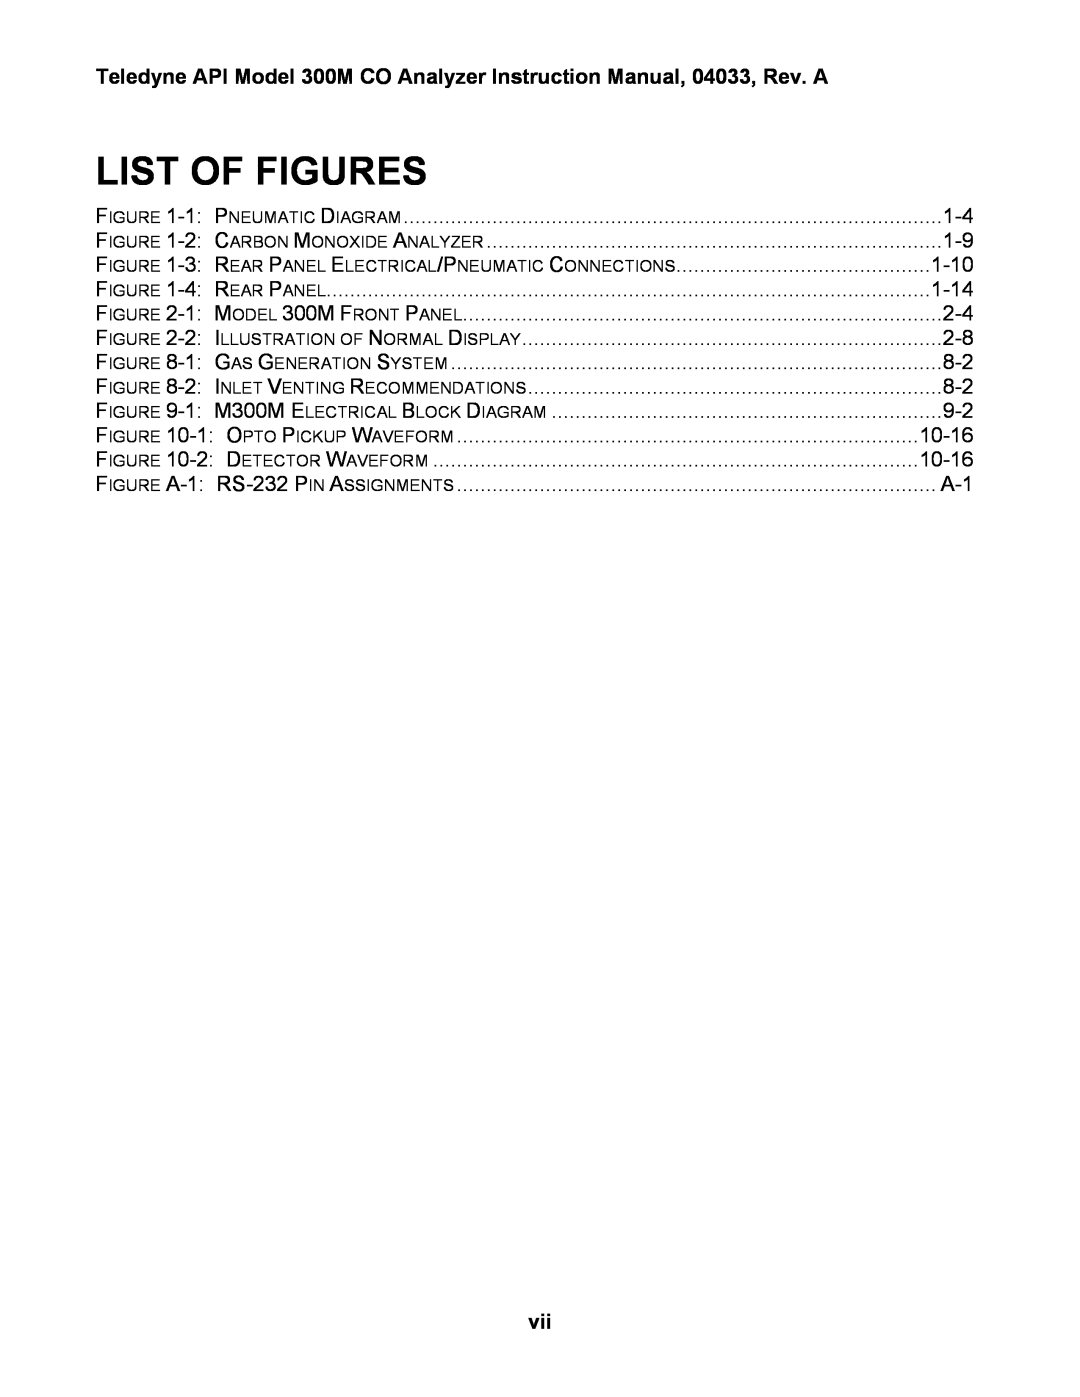 Teledyne 300M instruction manual List Of Figures 